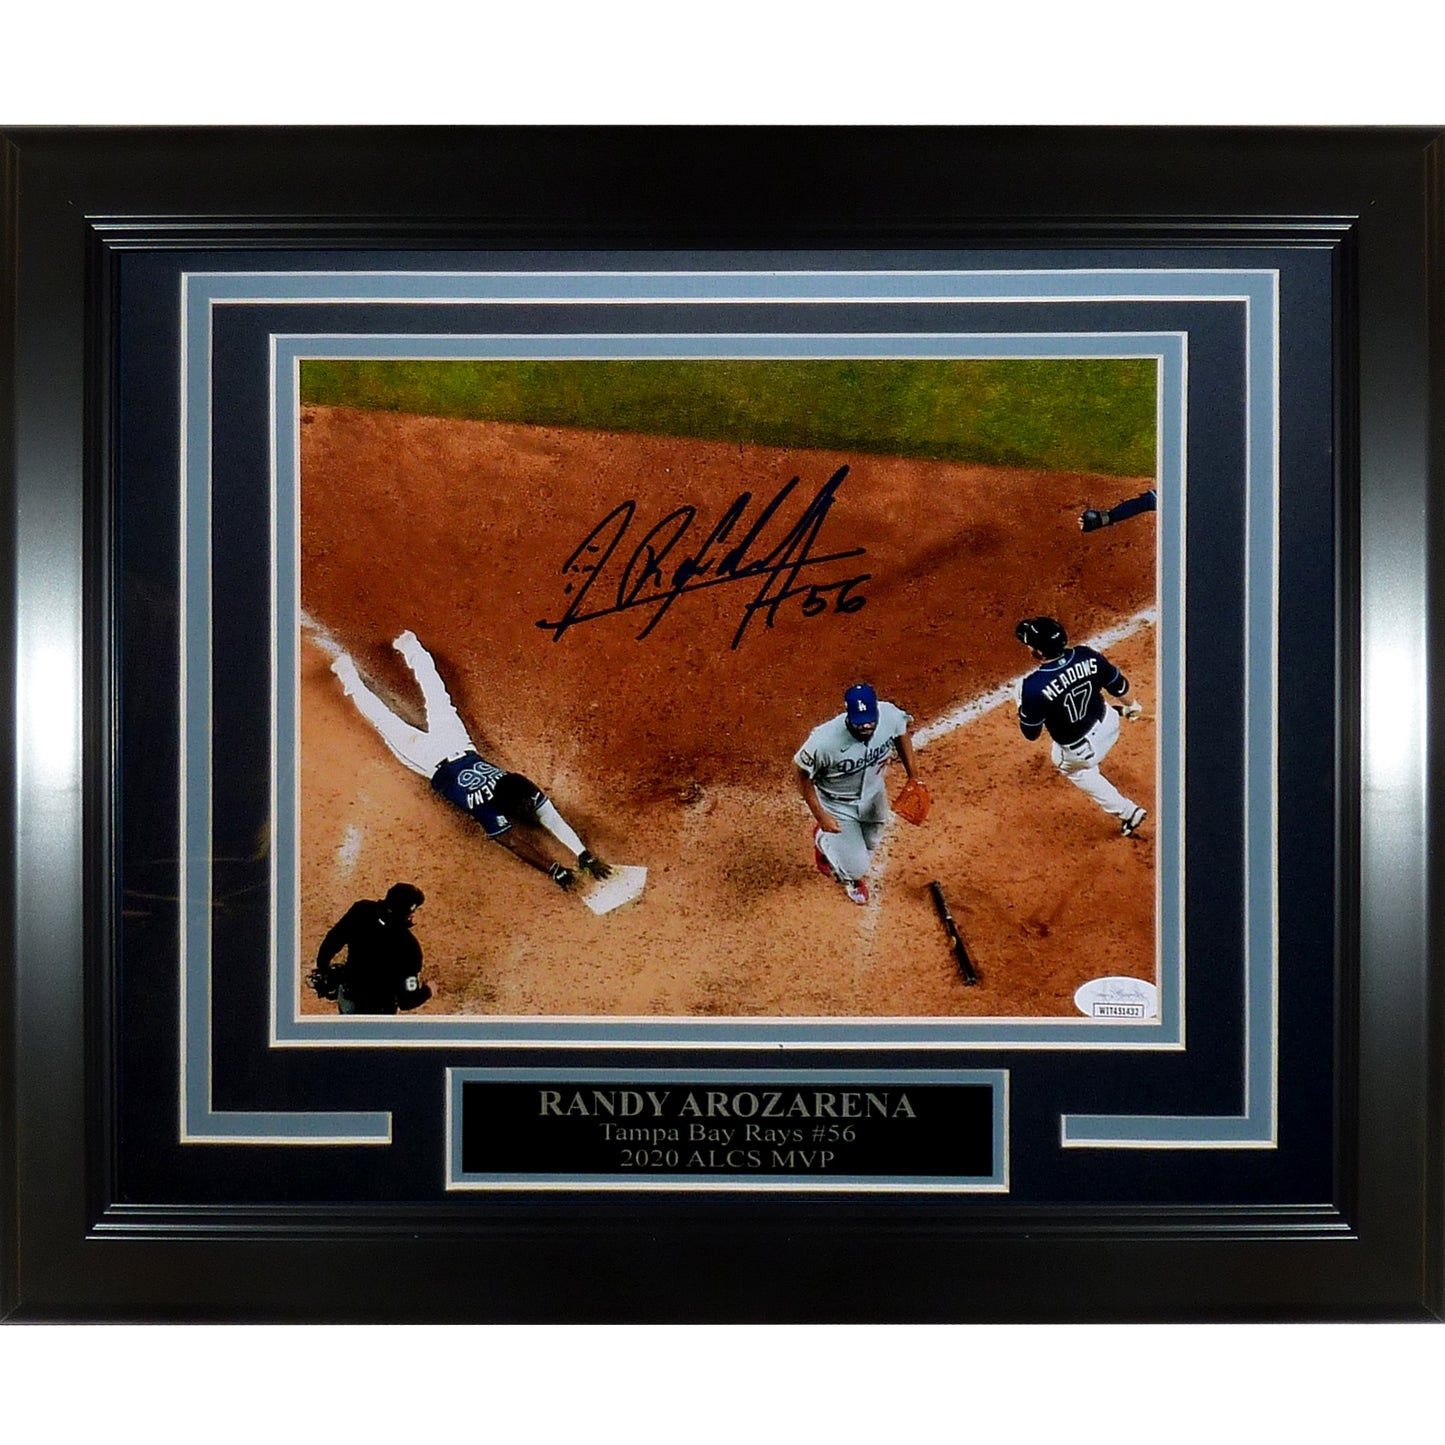 Randy Arozarena Autographed Tampa Bay Rays (2020 World Series Game 6 Slide) Framed 8×10 Photo – JSA